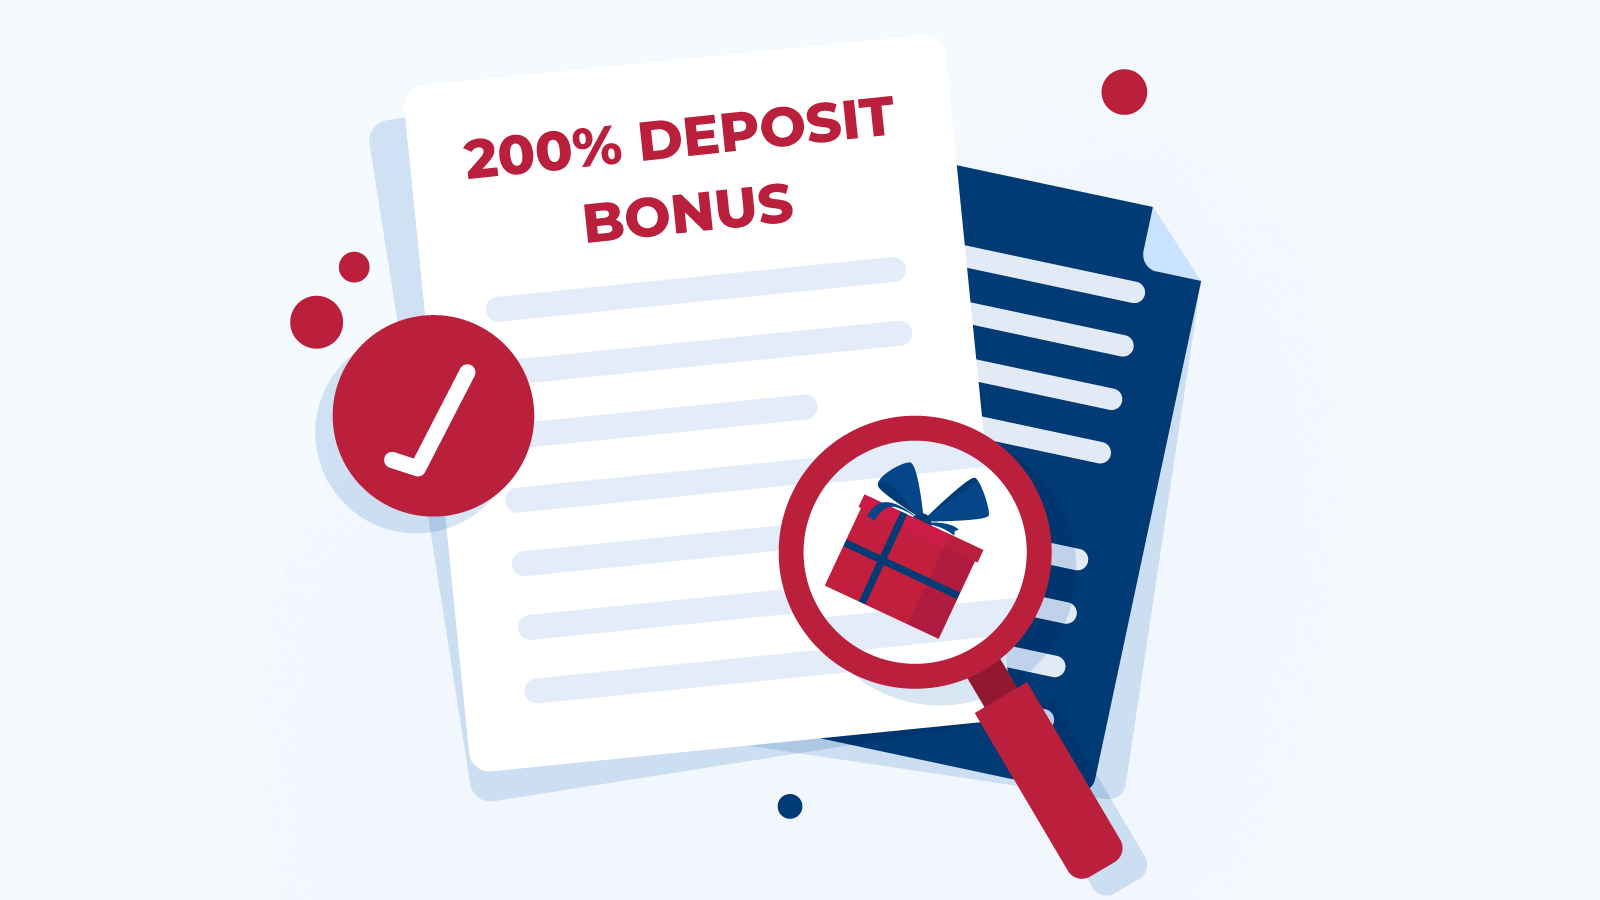 Why pick a 200% deposit bonus